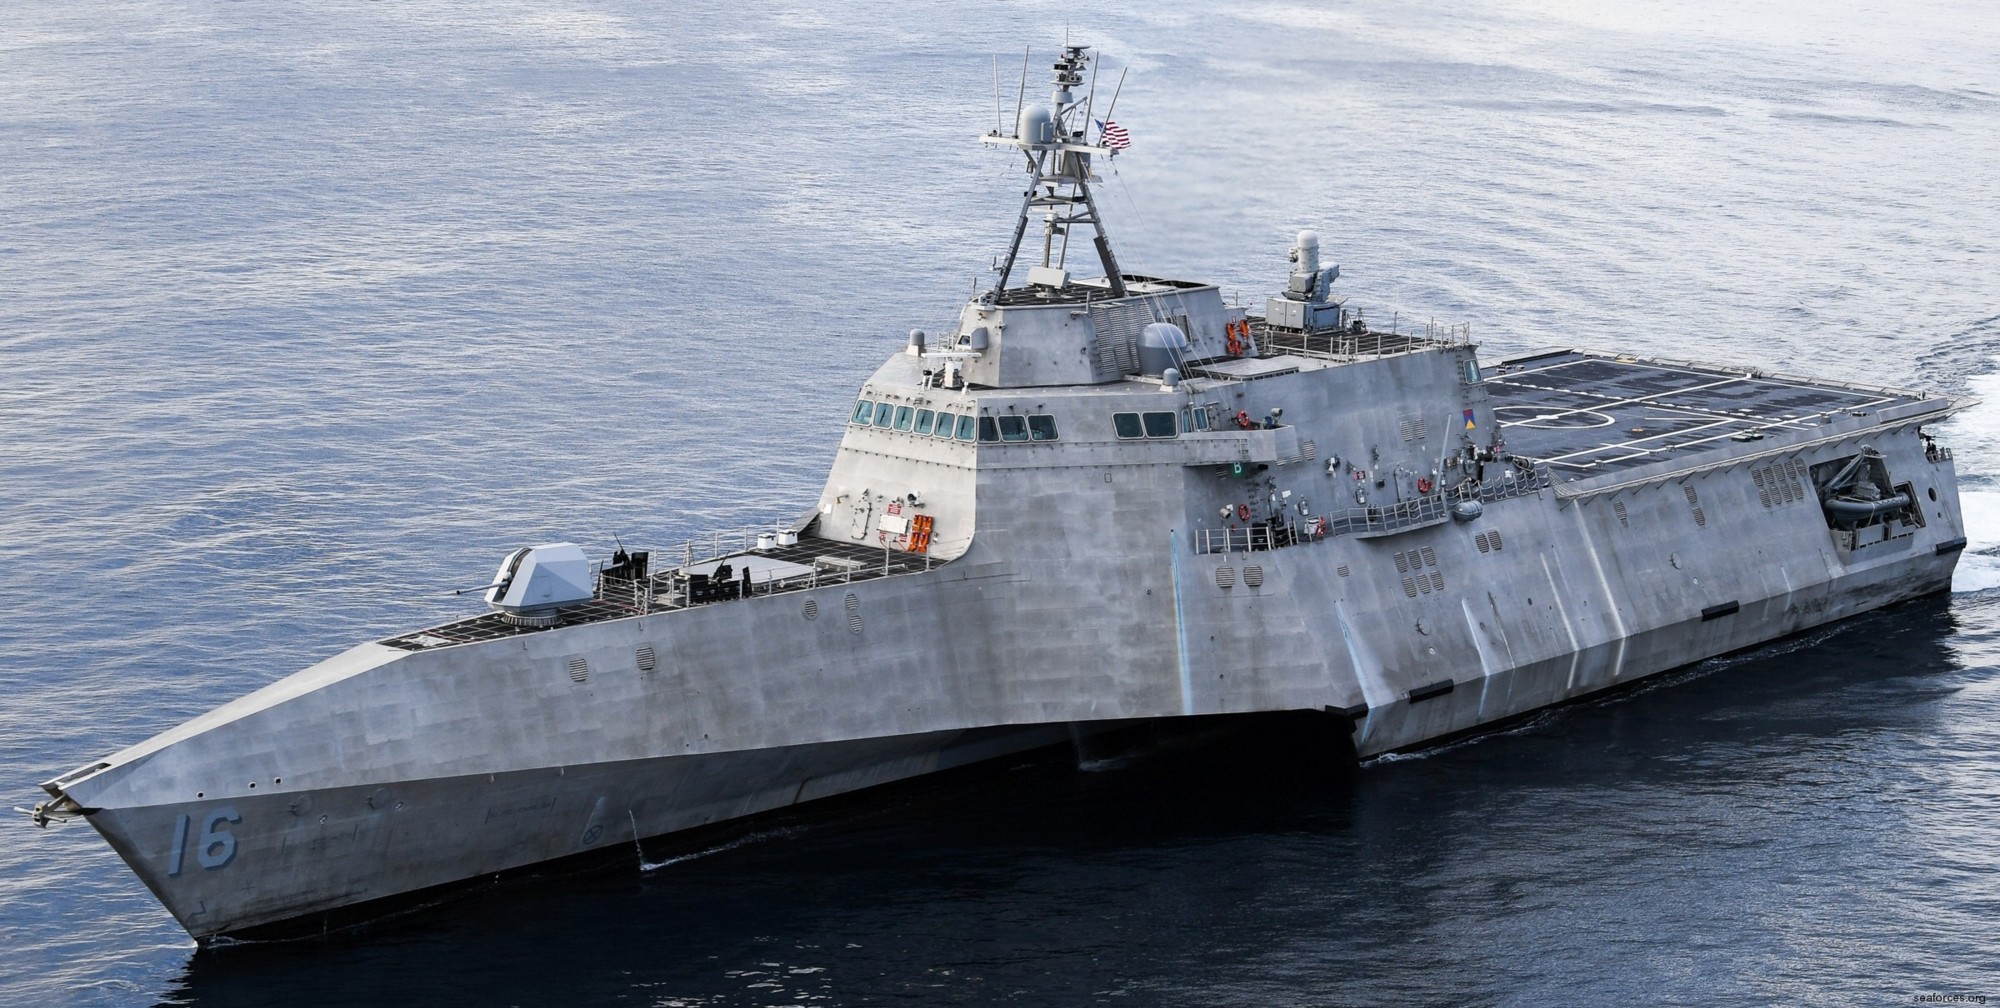 lcs-16 uss tulsa littoral combat ship independence class us navy 17x austal mobile